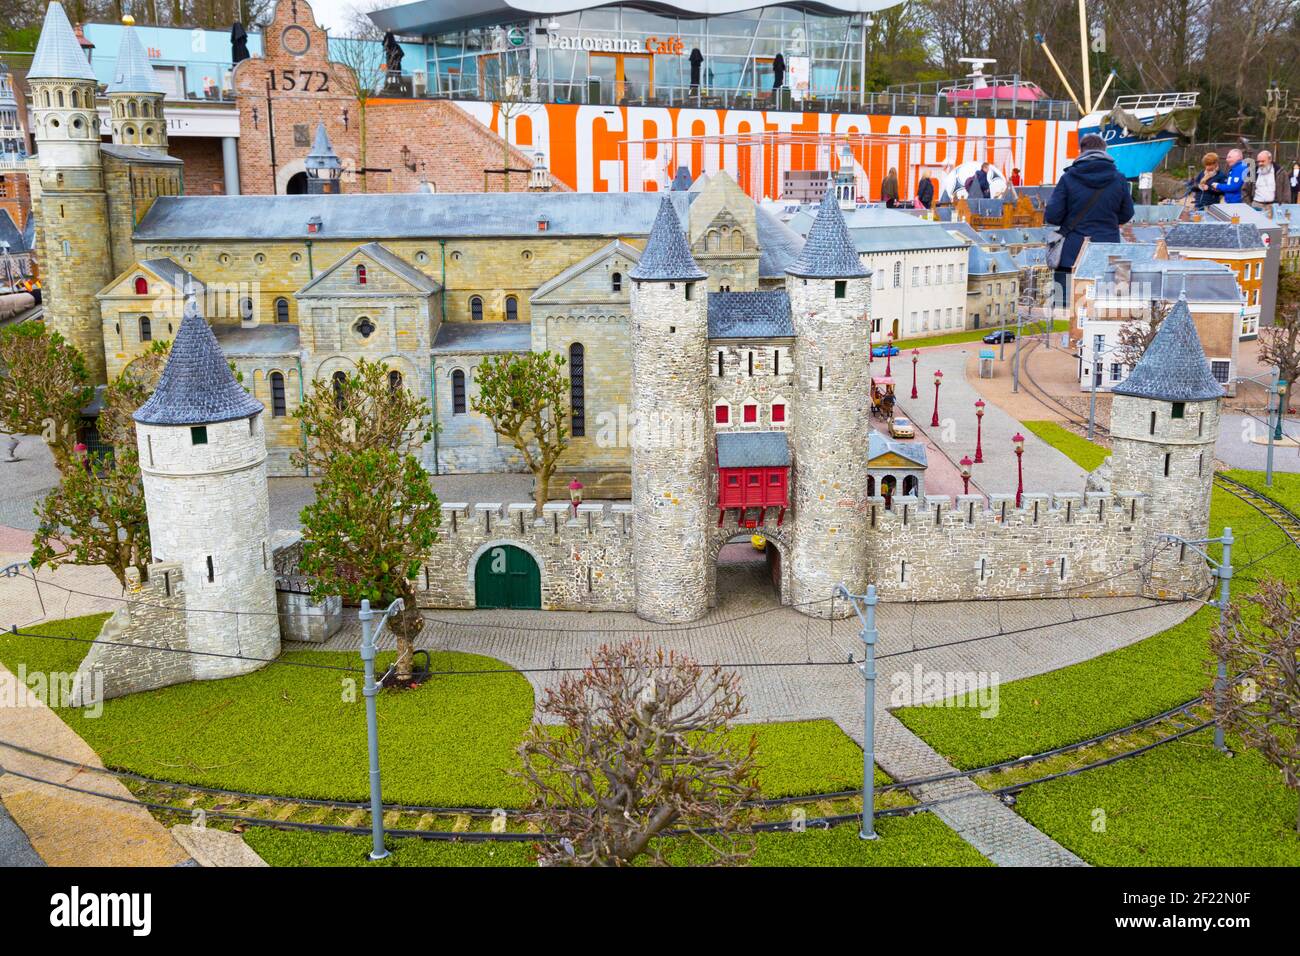 Madurodam, miniature park and tourist attraction in Hague, Netherlands Stock Photo